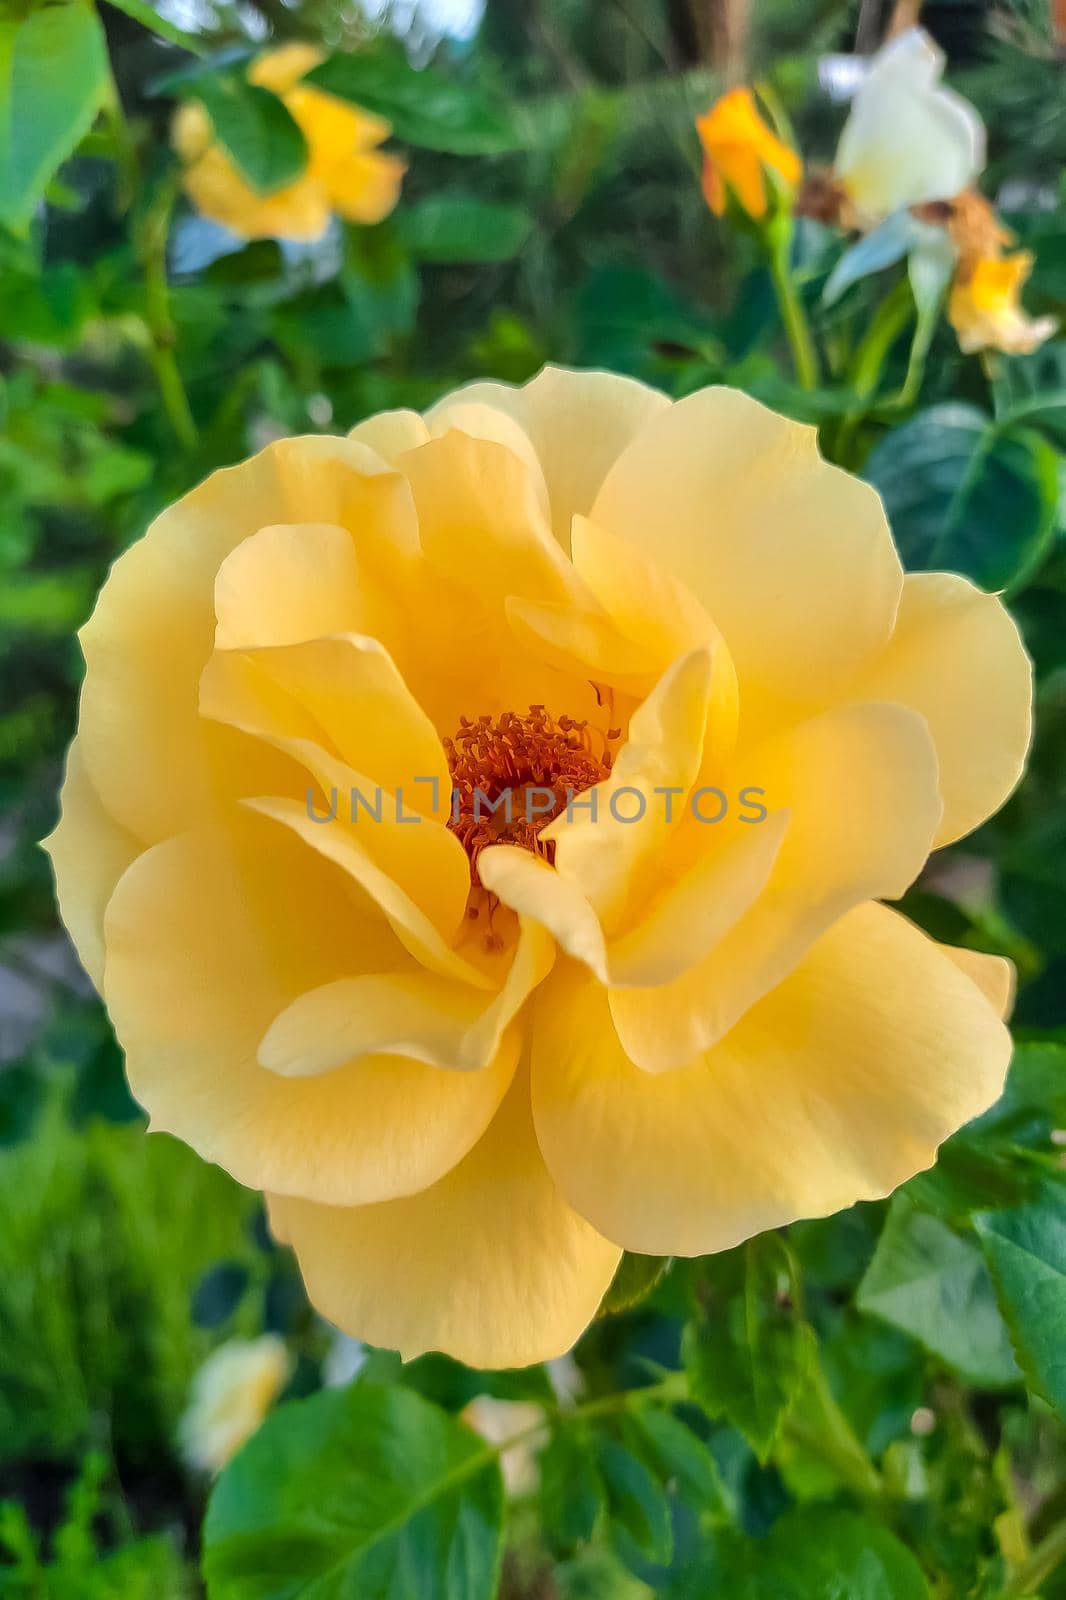 View of a beautiful orange rose flower in the garden. by kip02kas